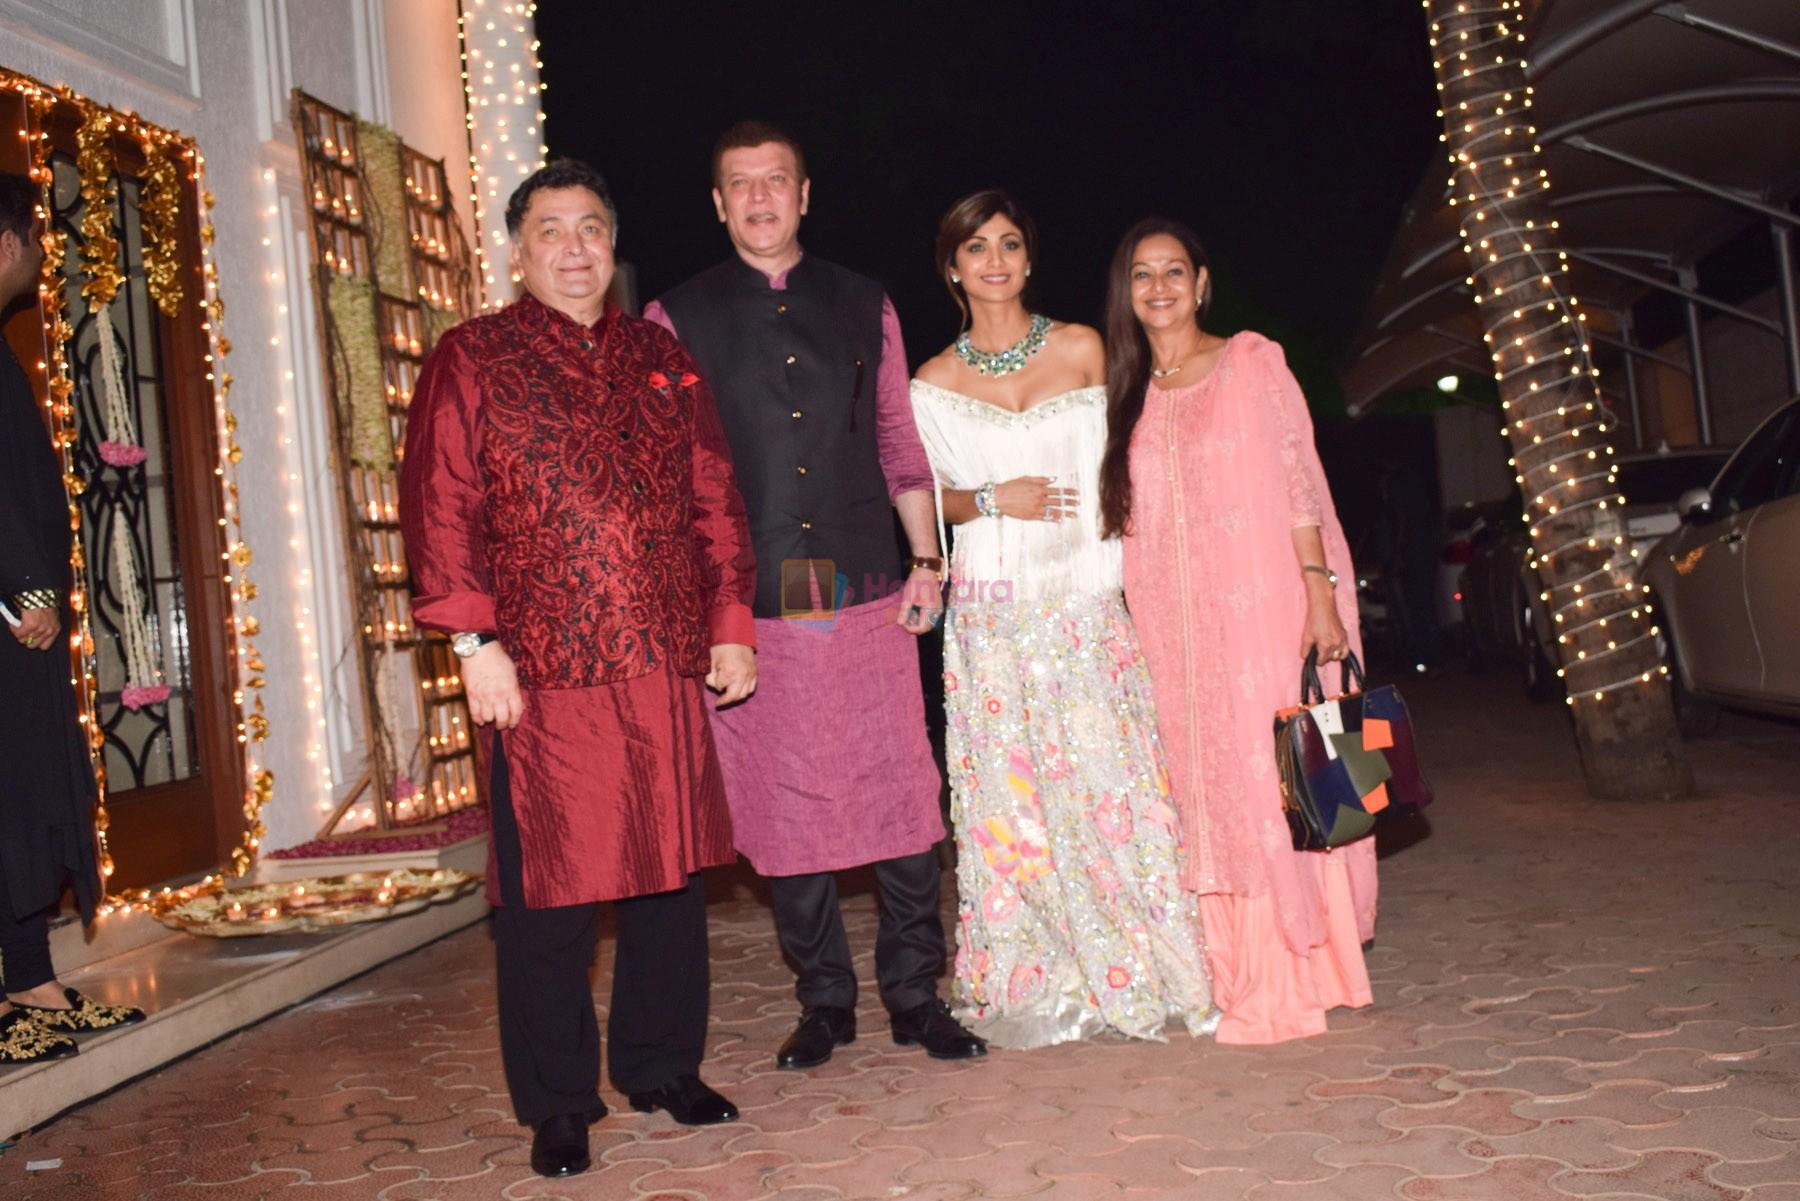 Rishi Kapoor at Shilpa Shetty's Diwali party on 20th Oct 2017